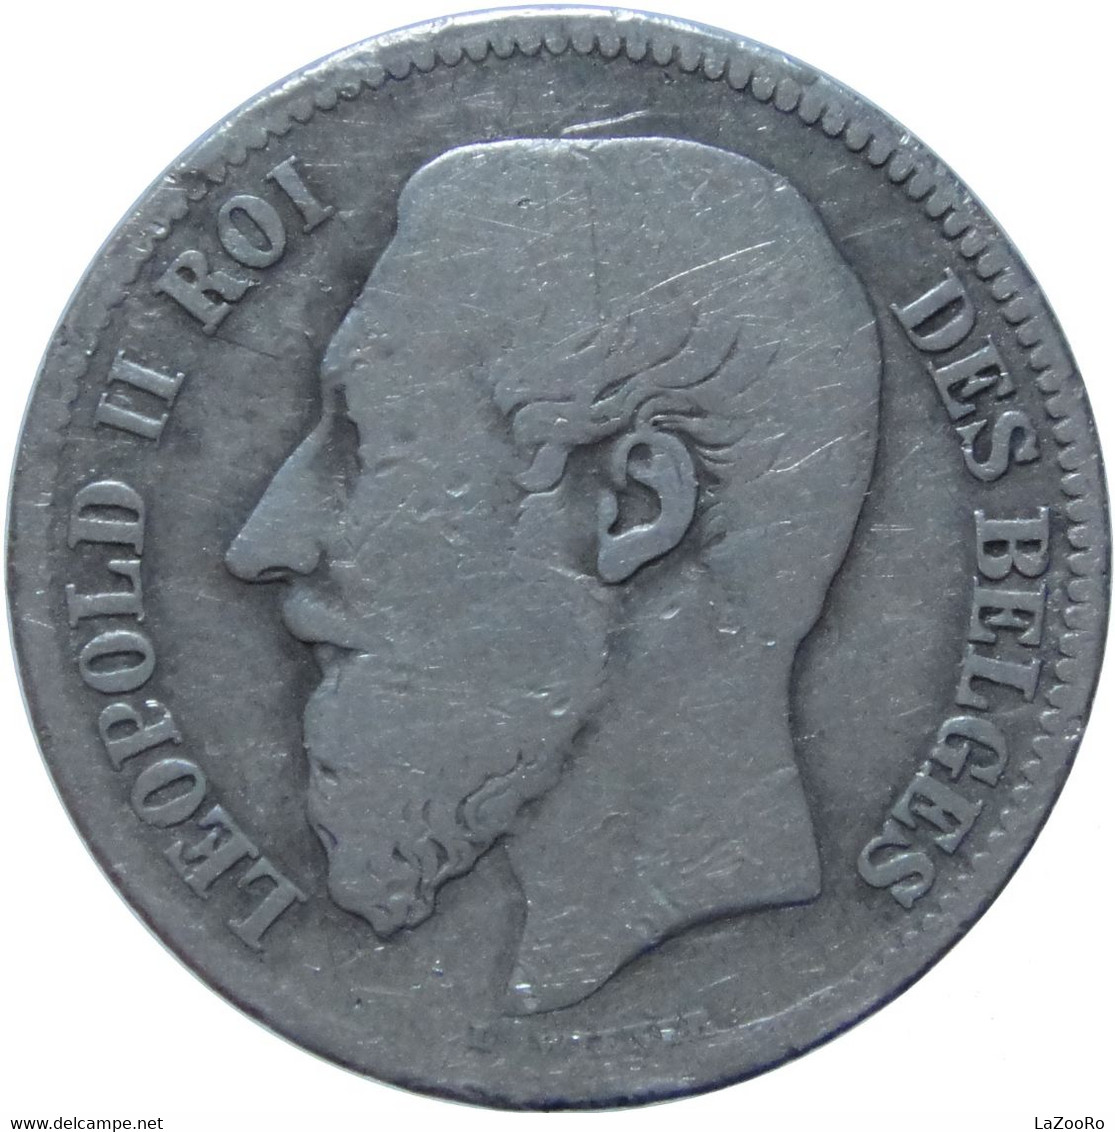 LaZooRo: Belgium 1 Franc 1867 VF - Silver - 1 Frank